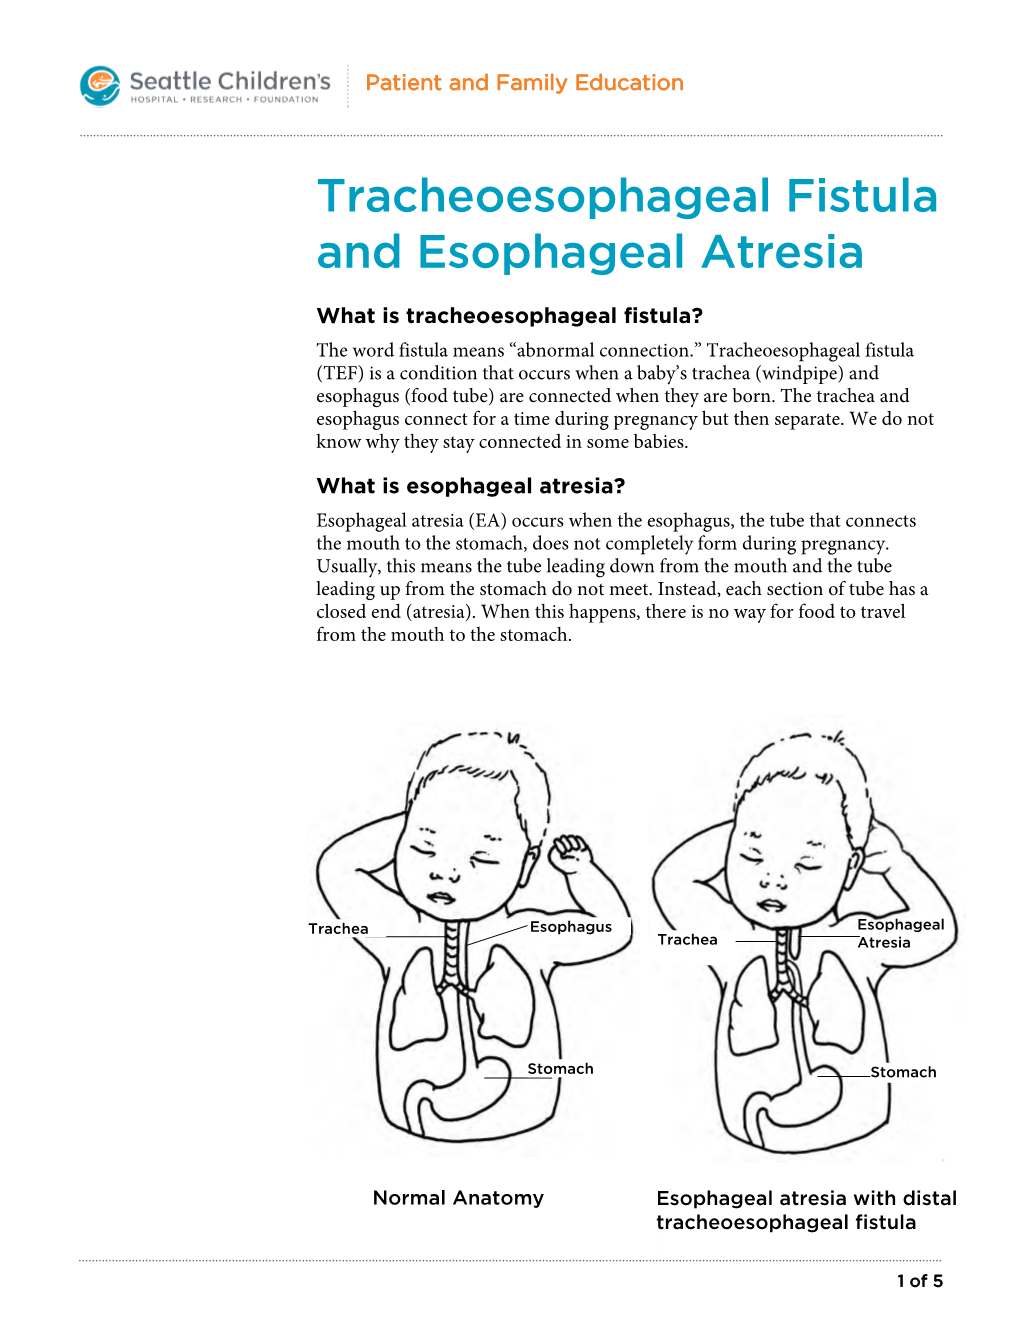 PE316 Tracheoesophageal Fistula and Esophageal Atresia